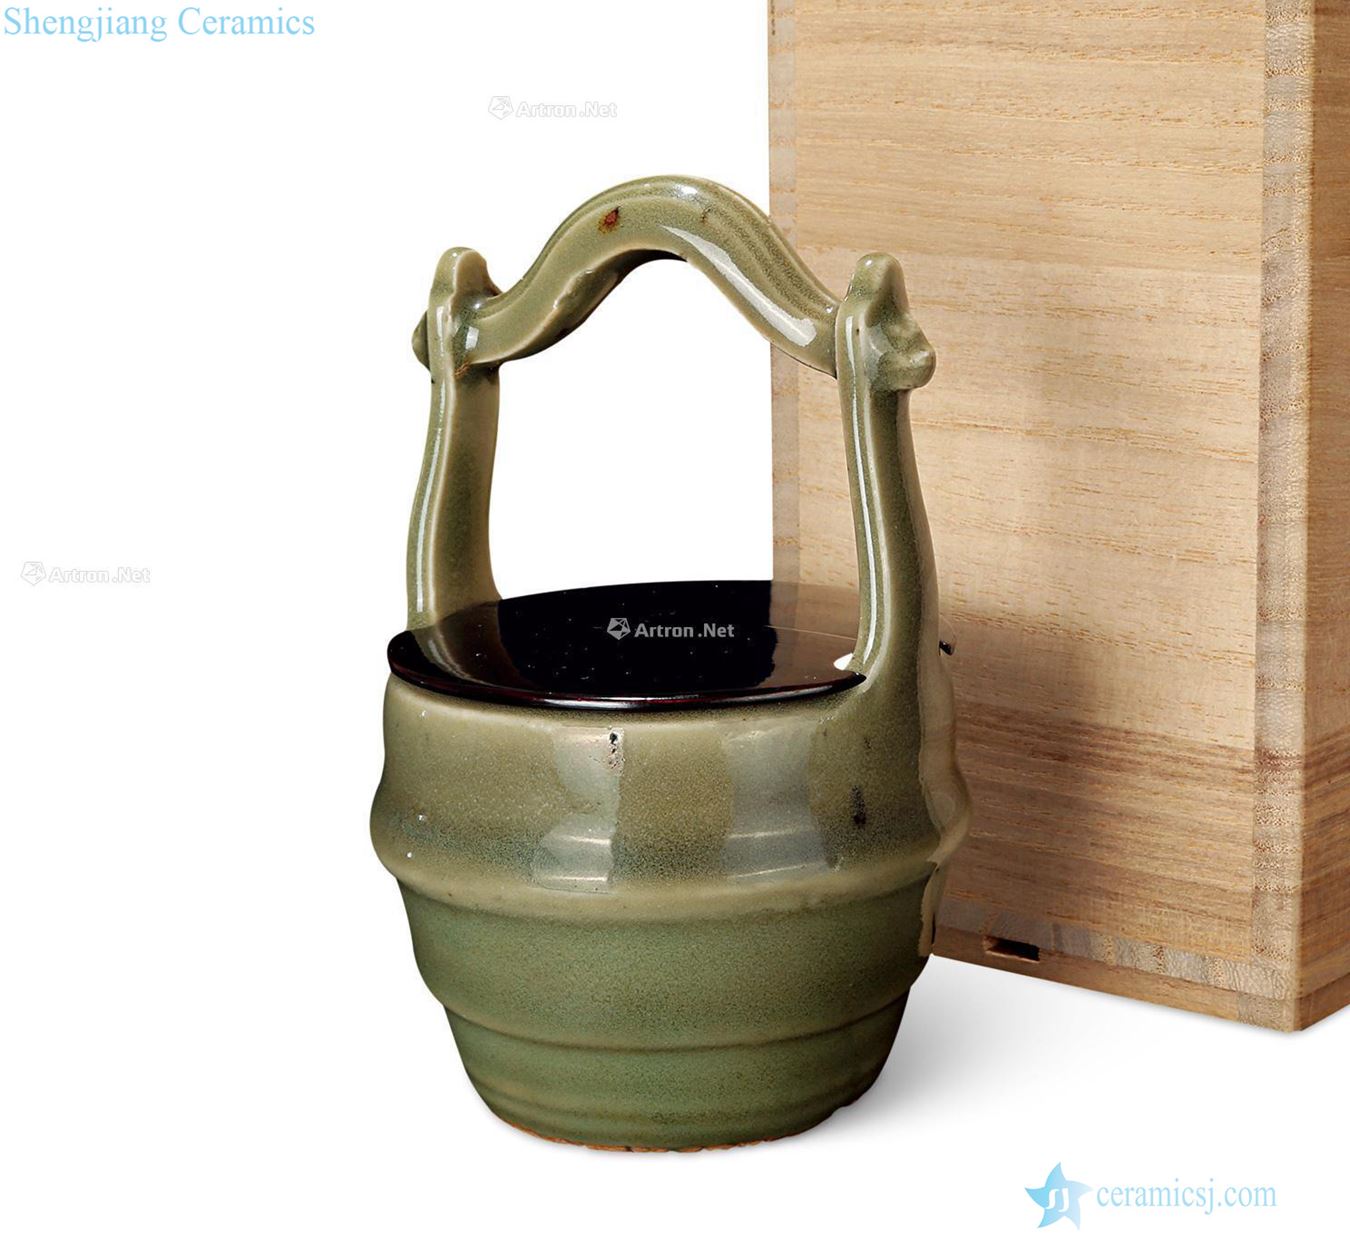 yuan Longquan celadon green glaze imitated barrel into the tea